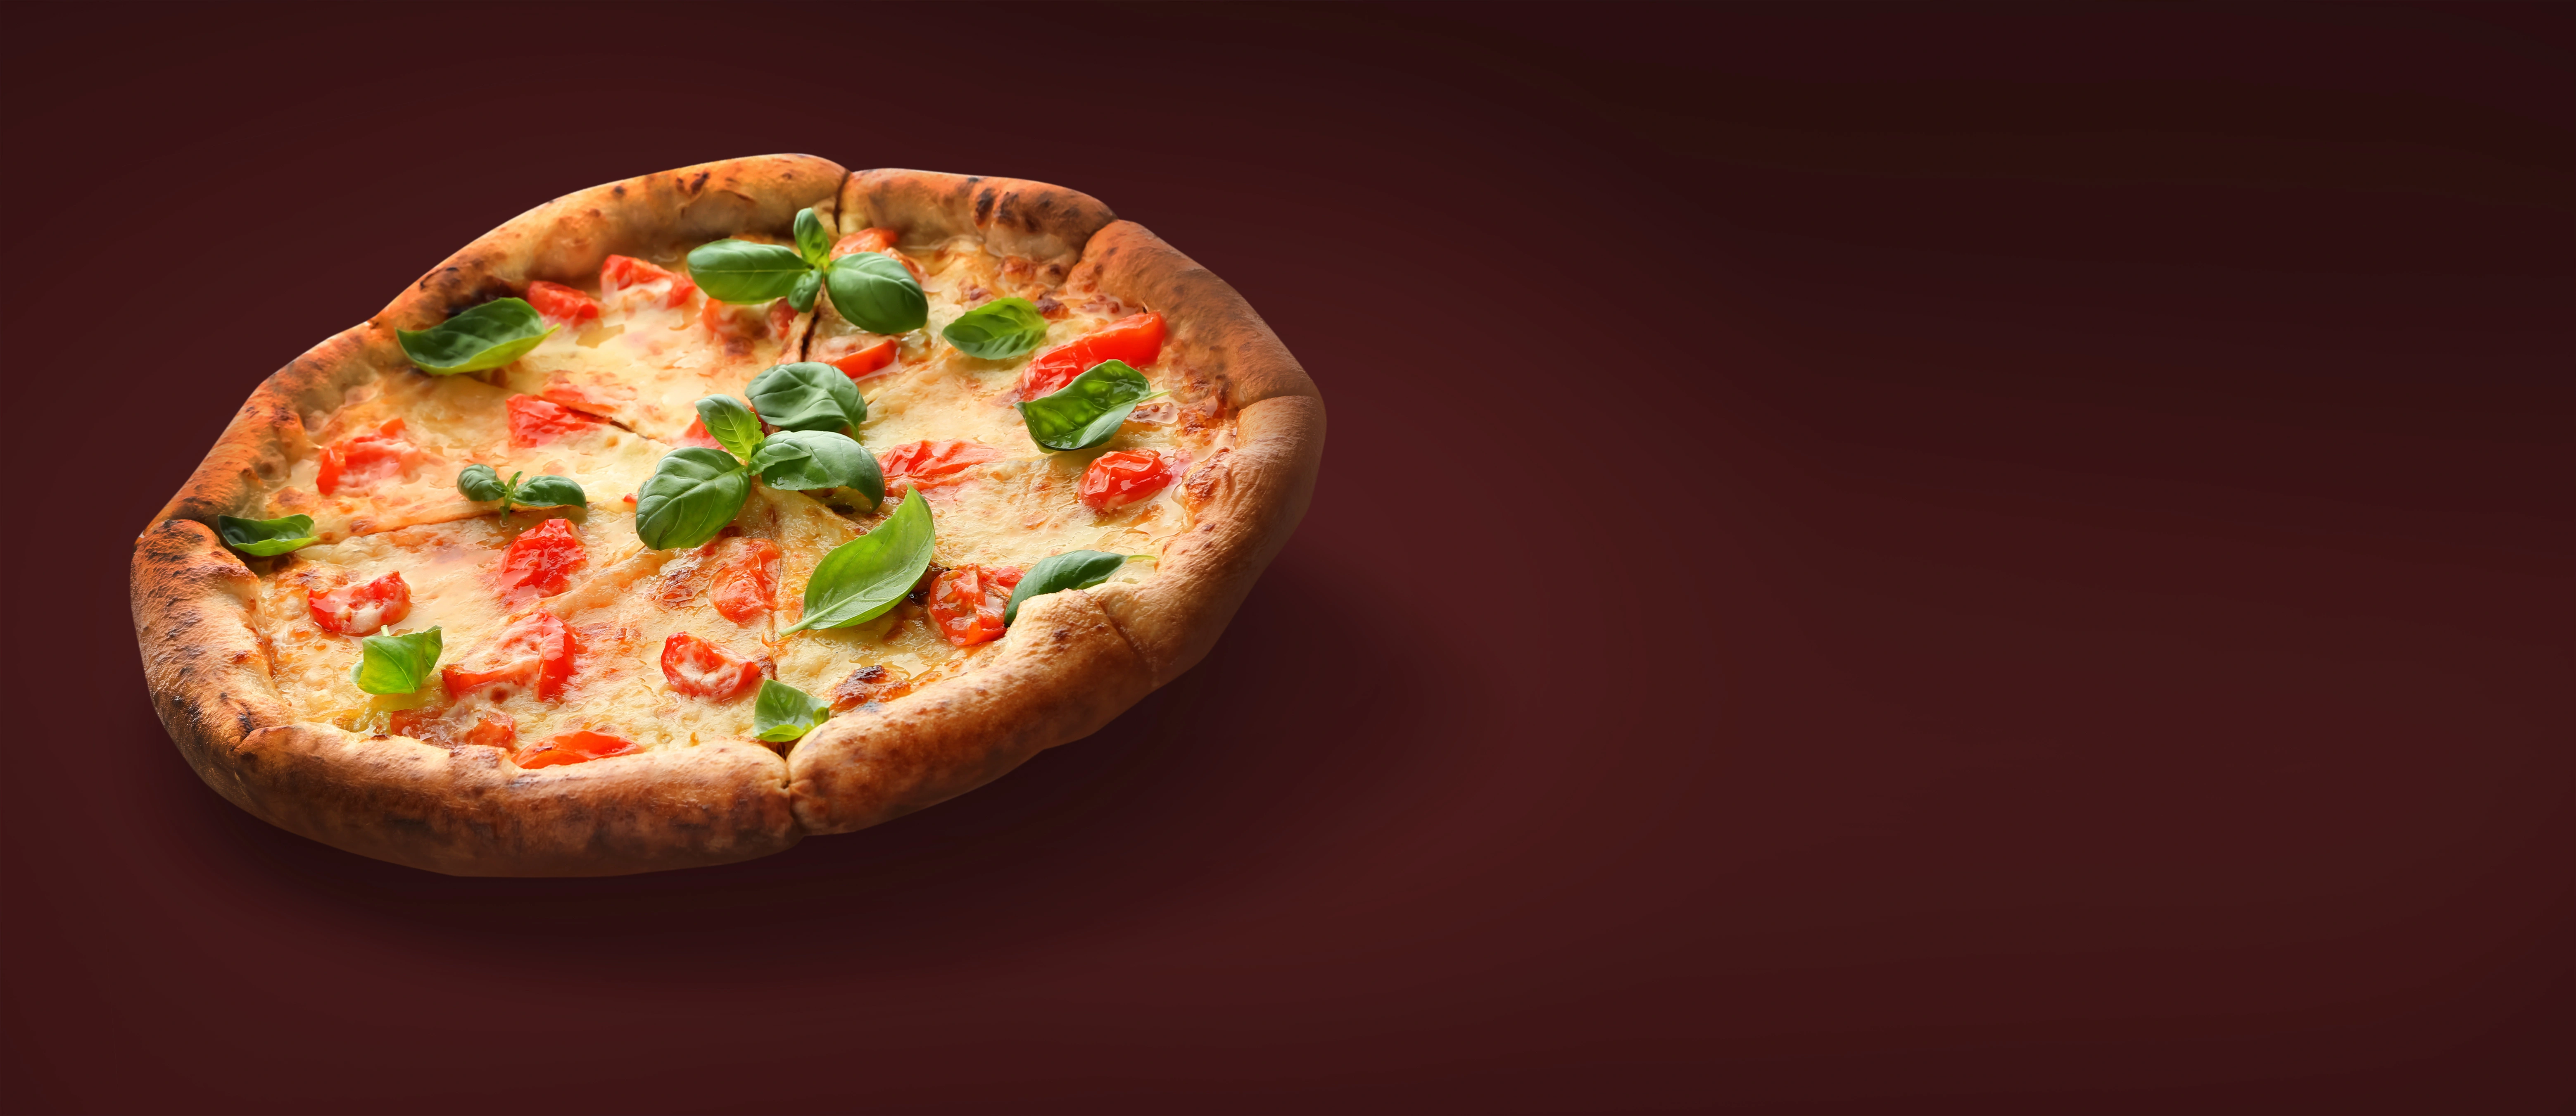 Antalya Pizza header image